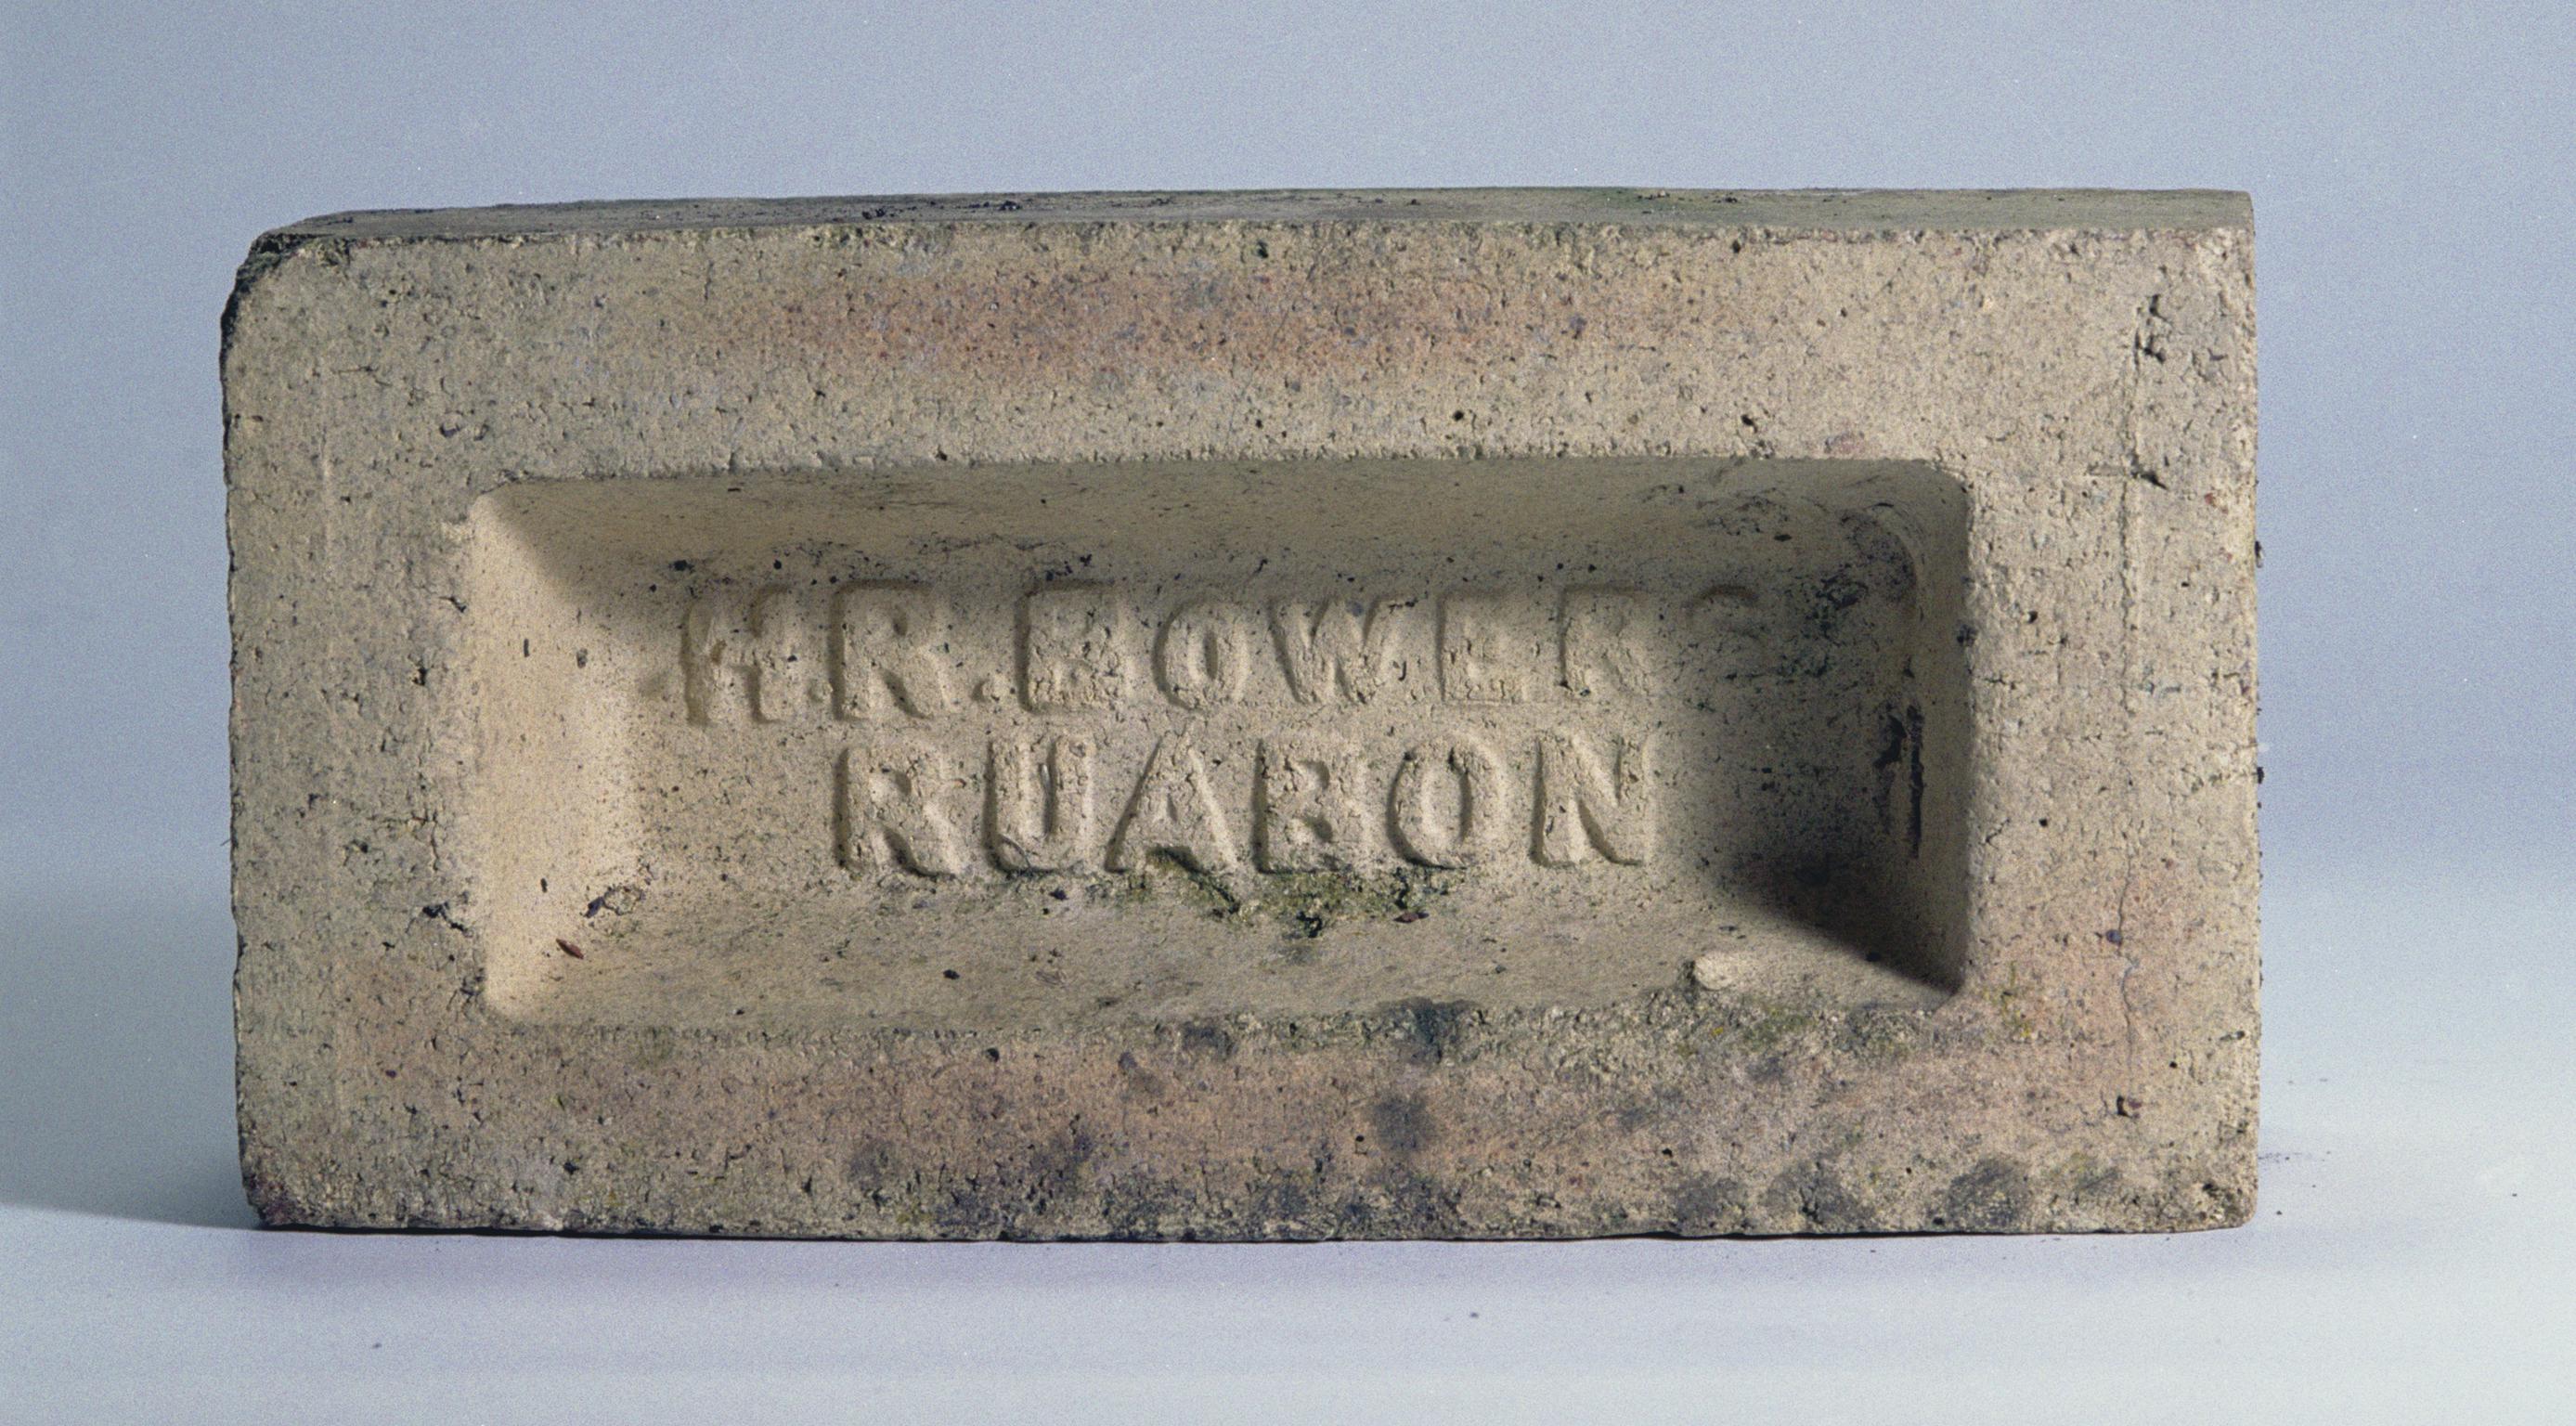 H.R. Bowers Ruabon, brick